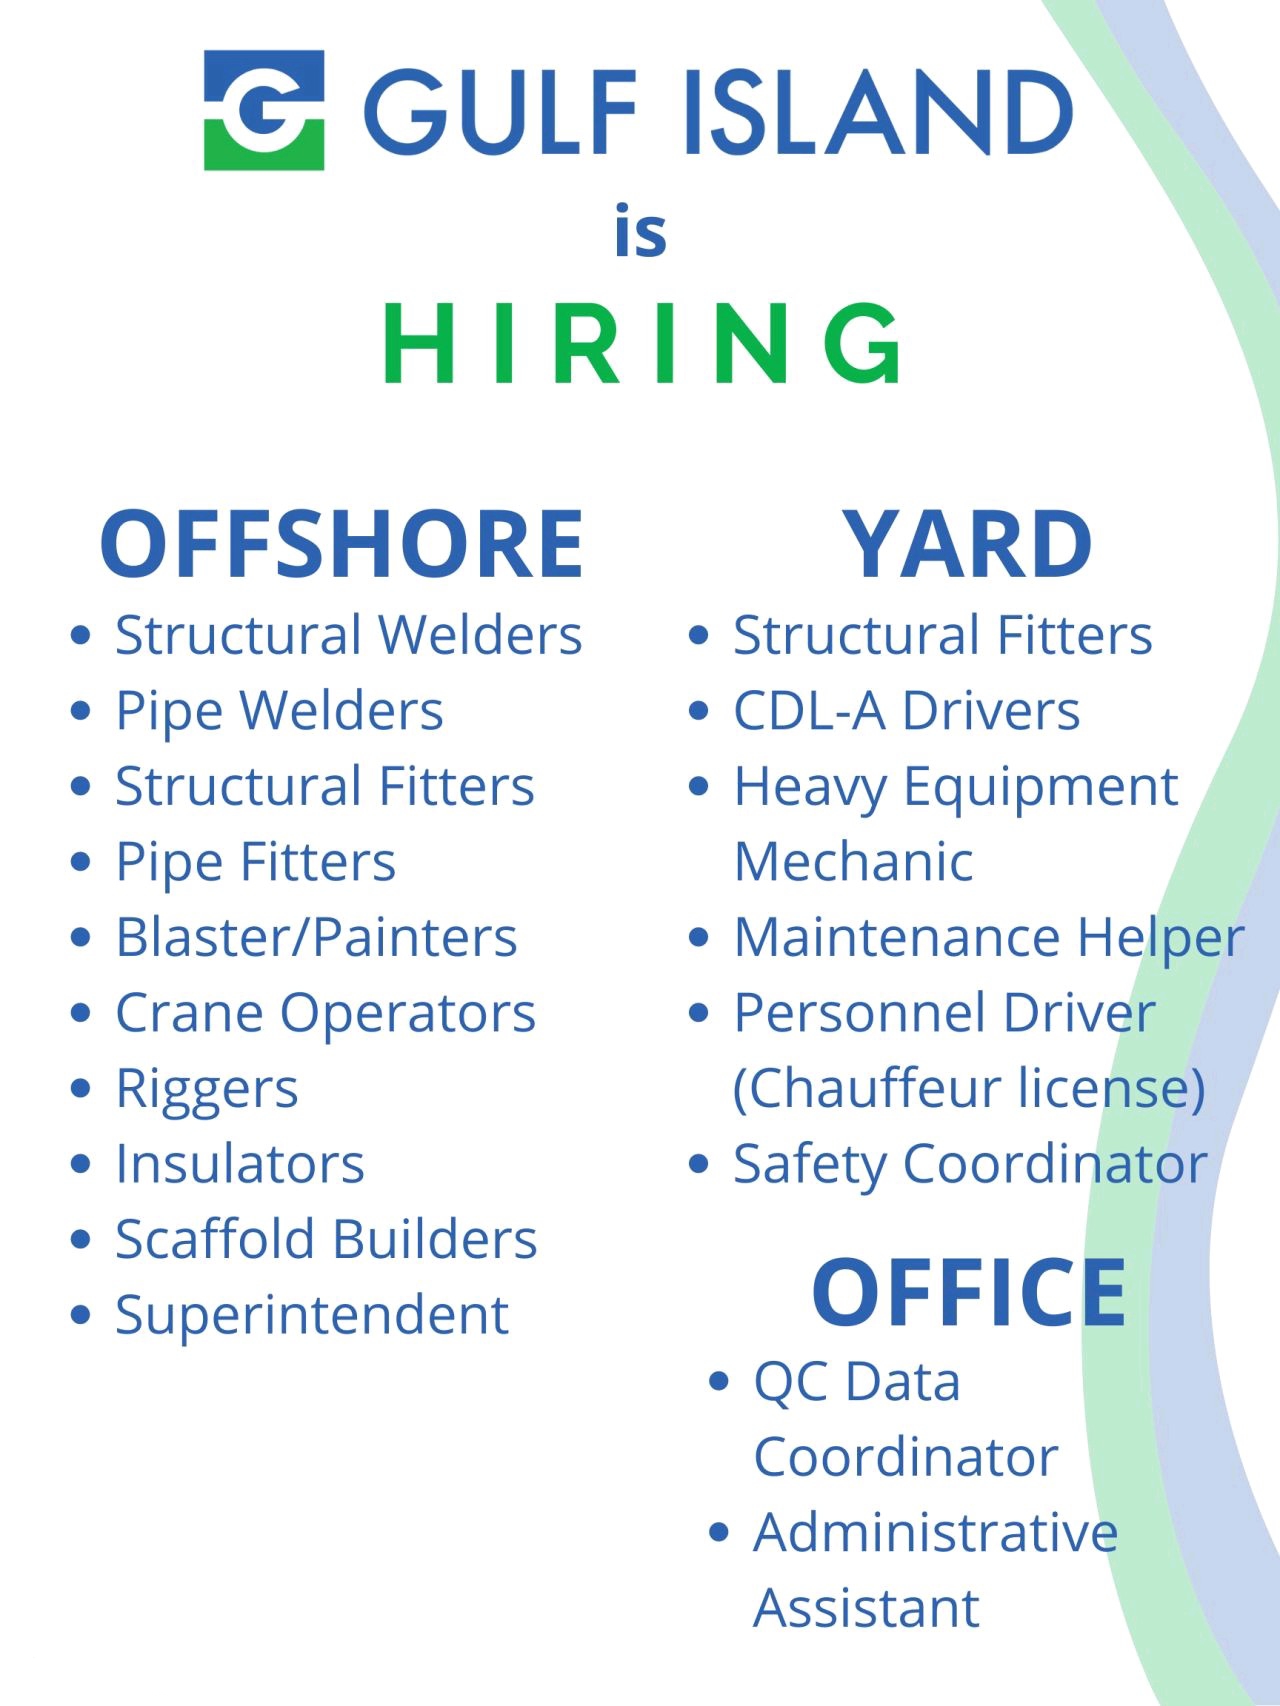 Multiple Offshore, Yard & Office Jobs